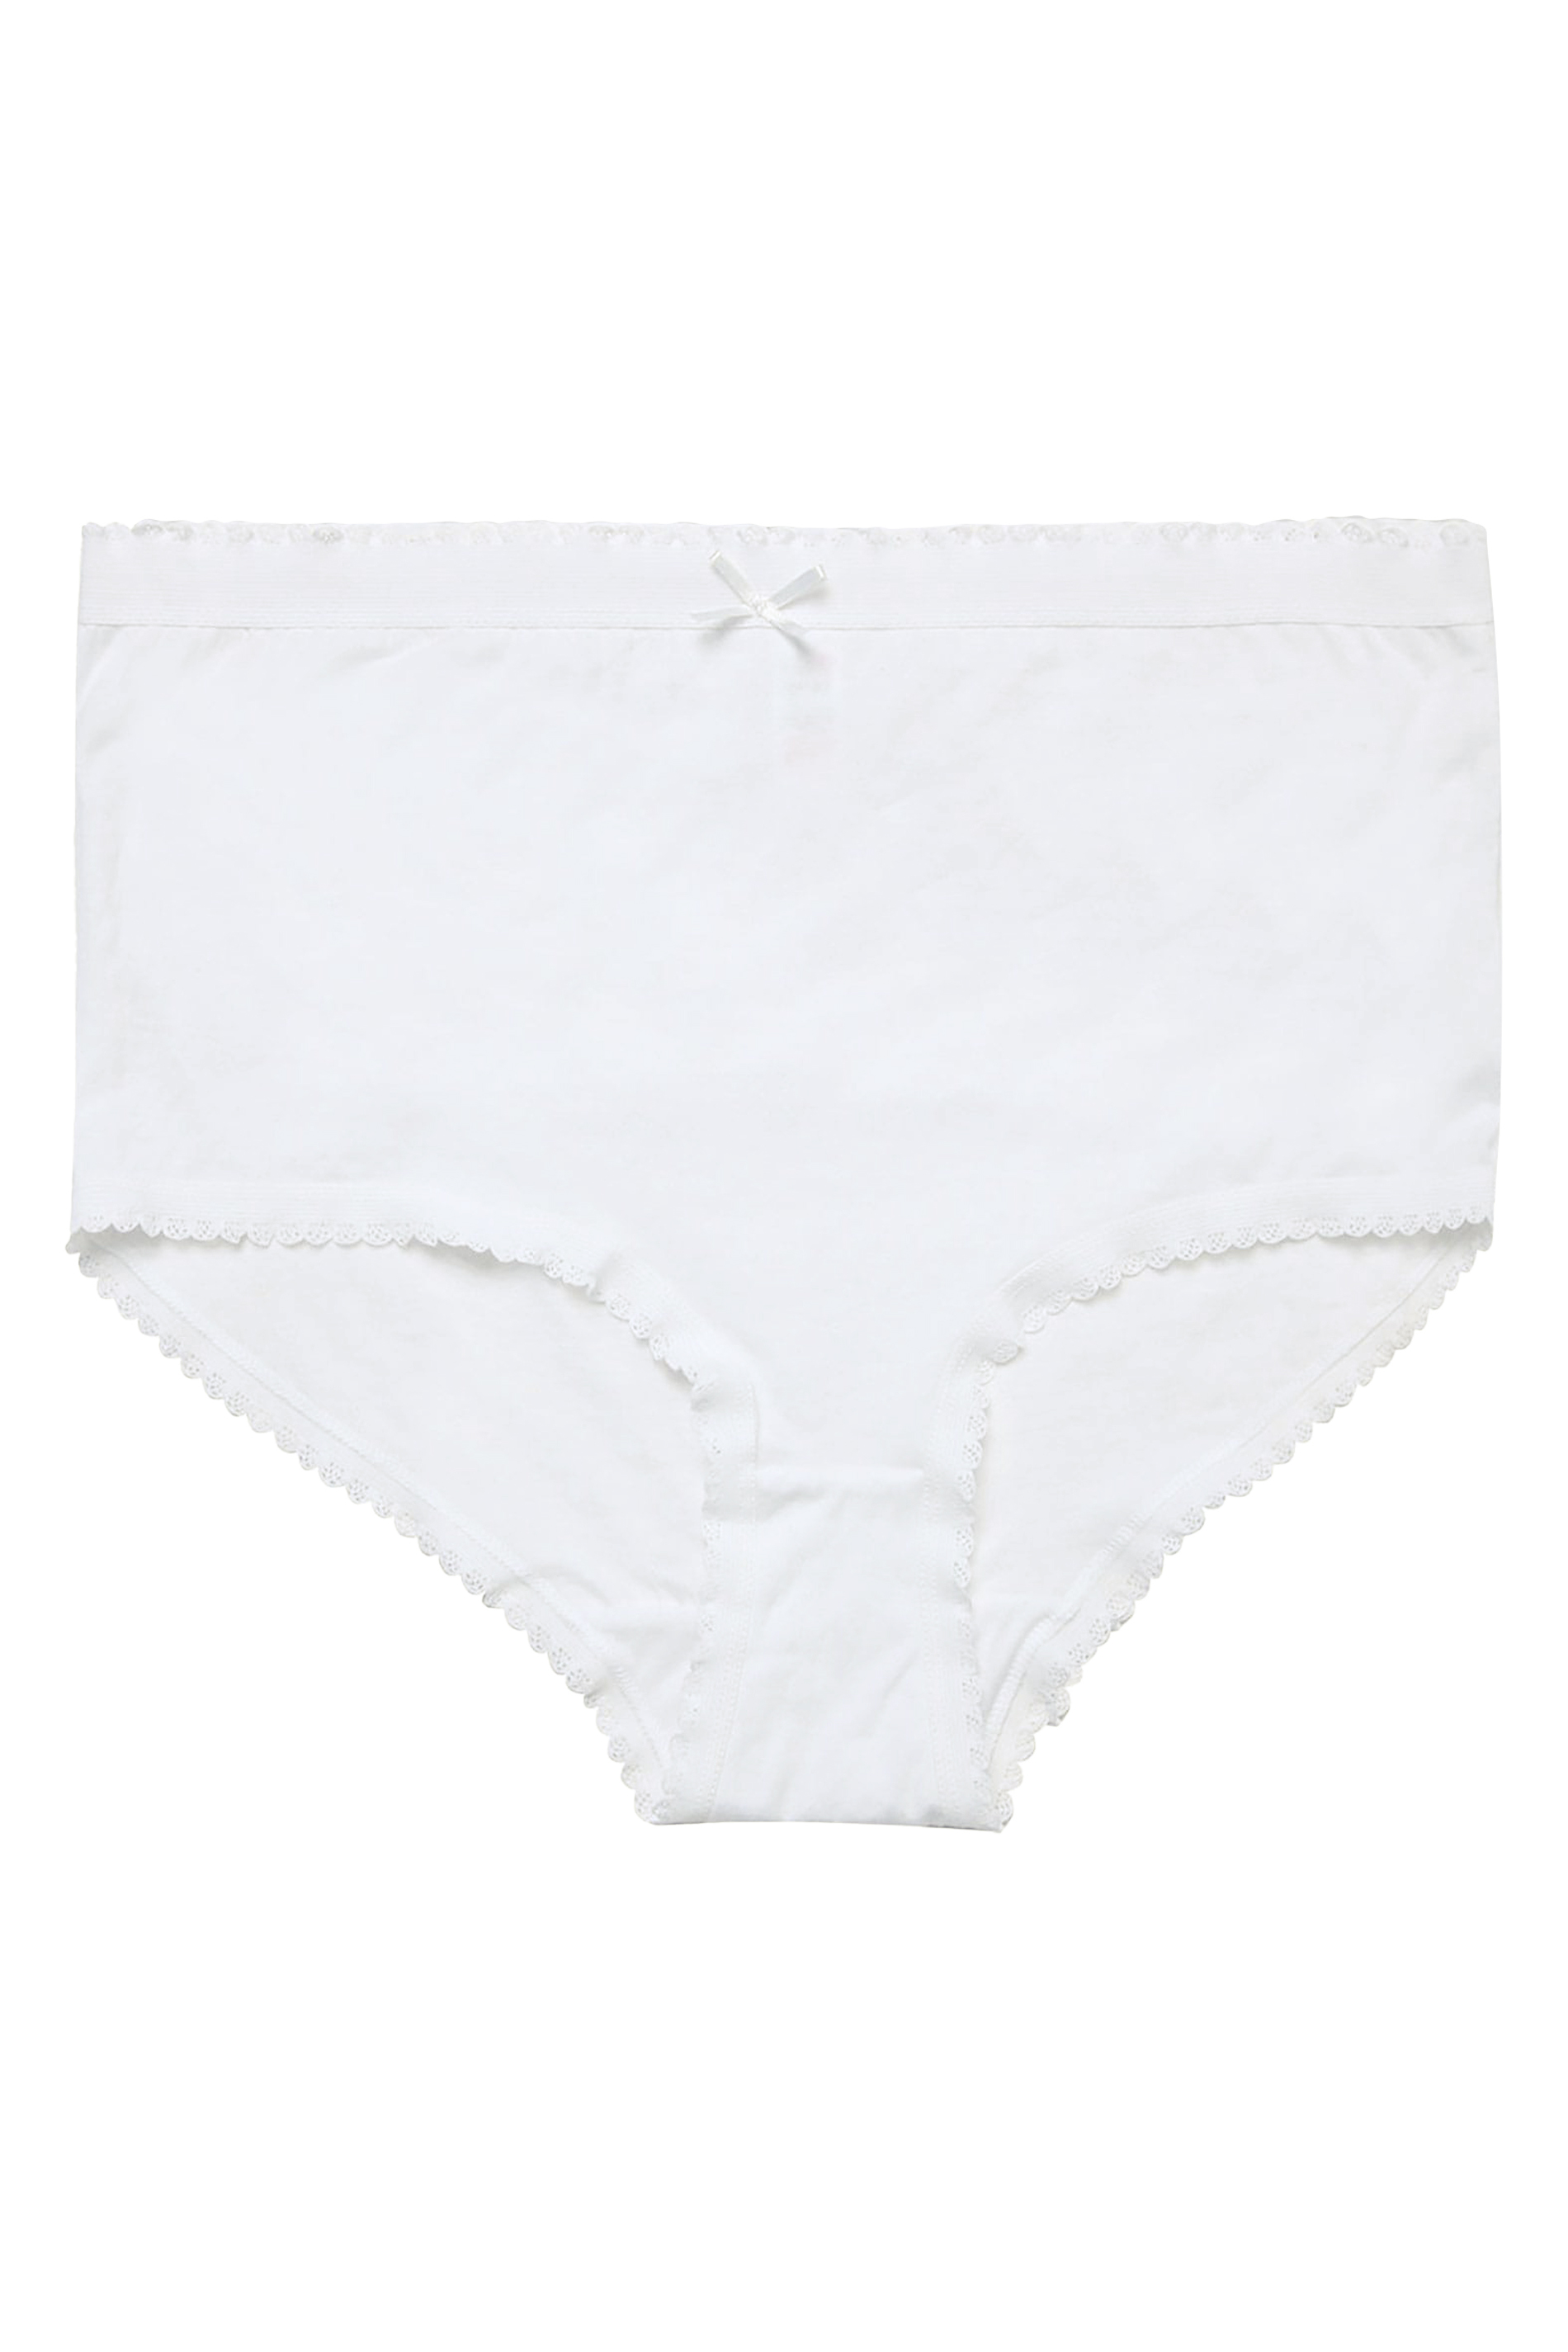 Cotton & Lace Full Underwear In white, Full Briefs